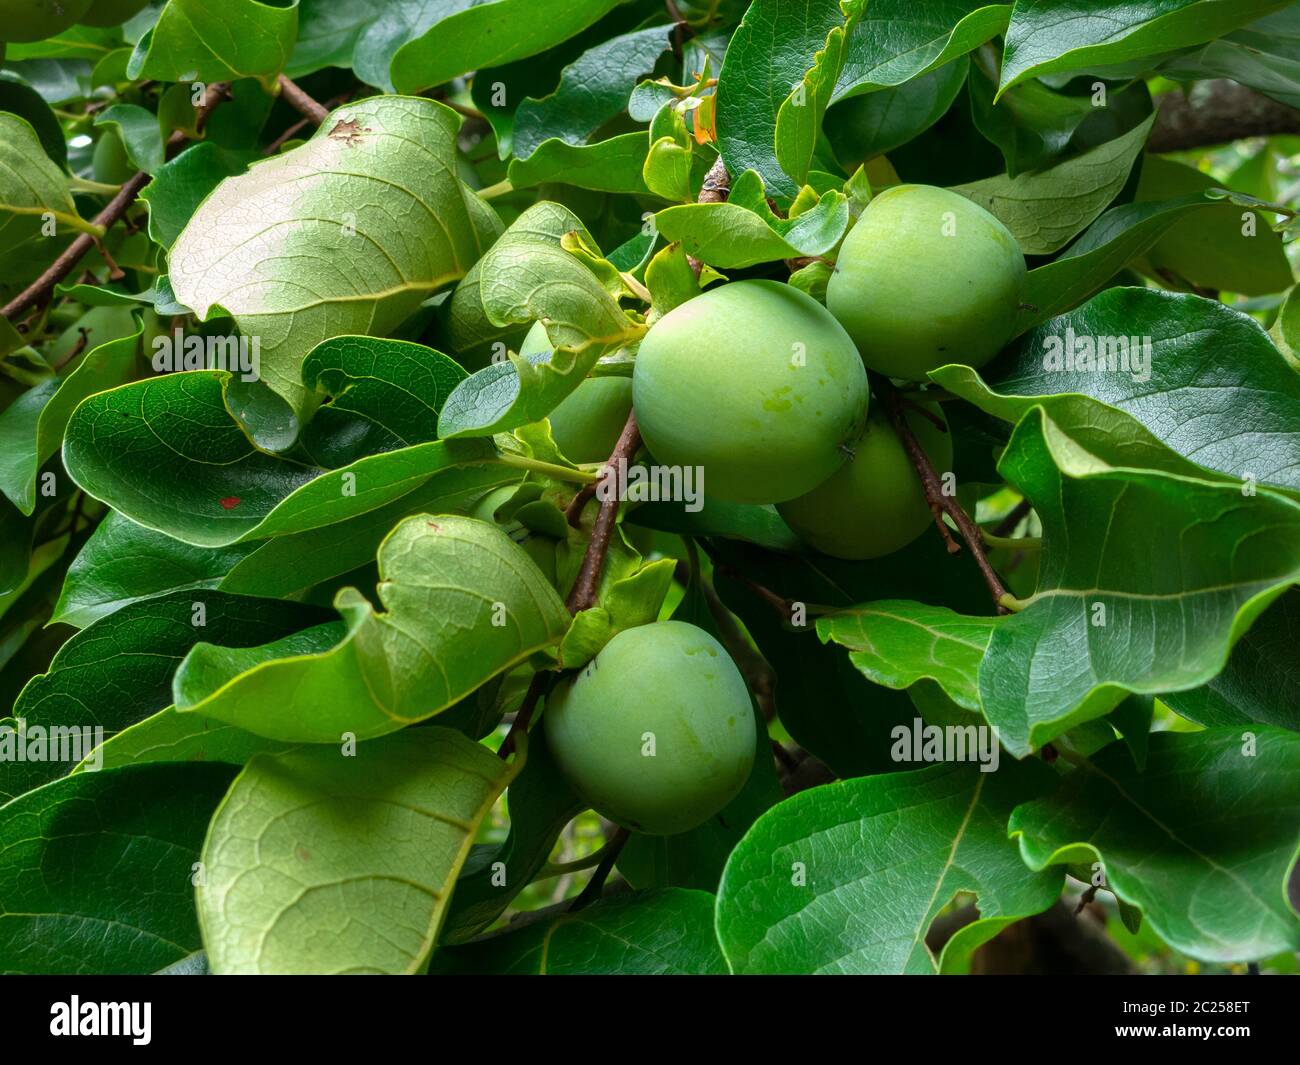 Not Mature green Kaki (Khaki, Persimmon) fruits on tree Stock Photo